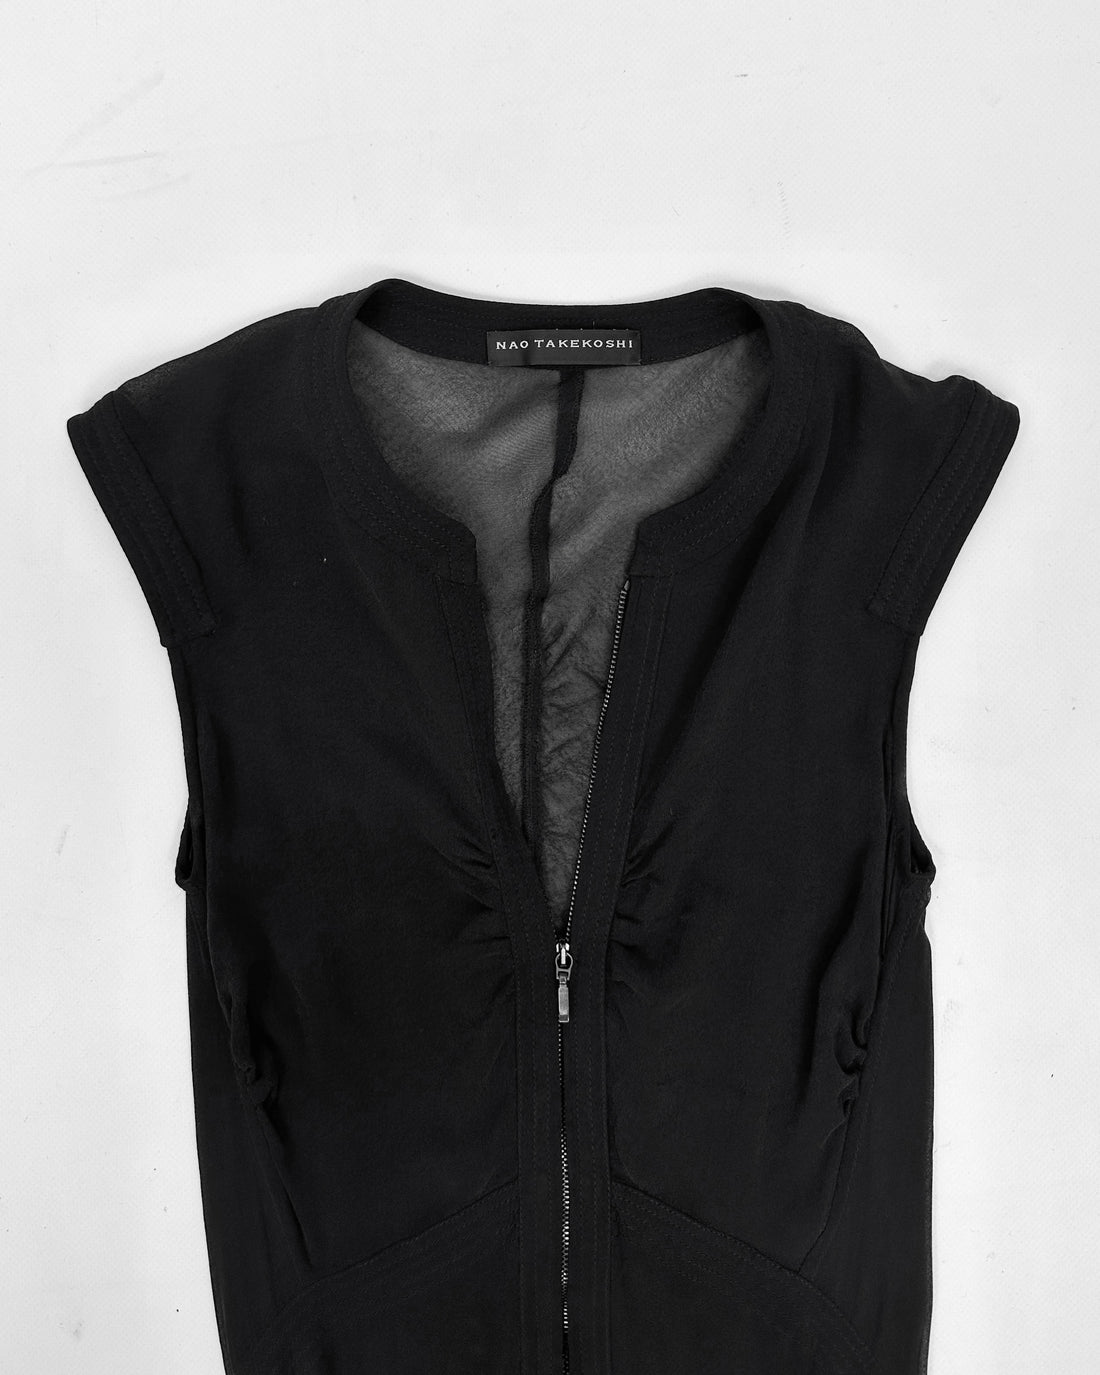 Nao Takekoshi Black Zipped Fluid Silk Dress 2000's